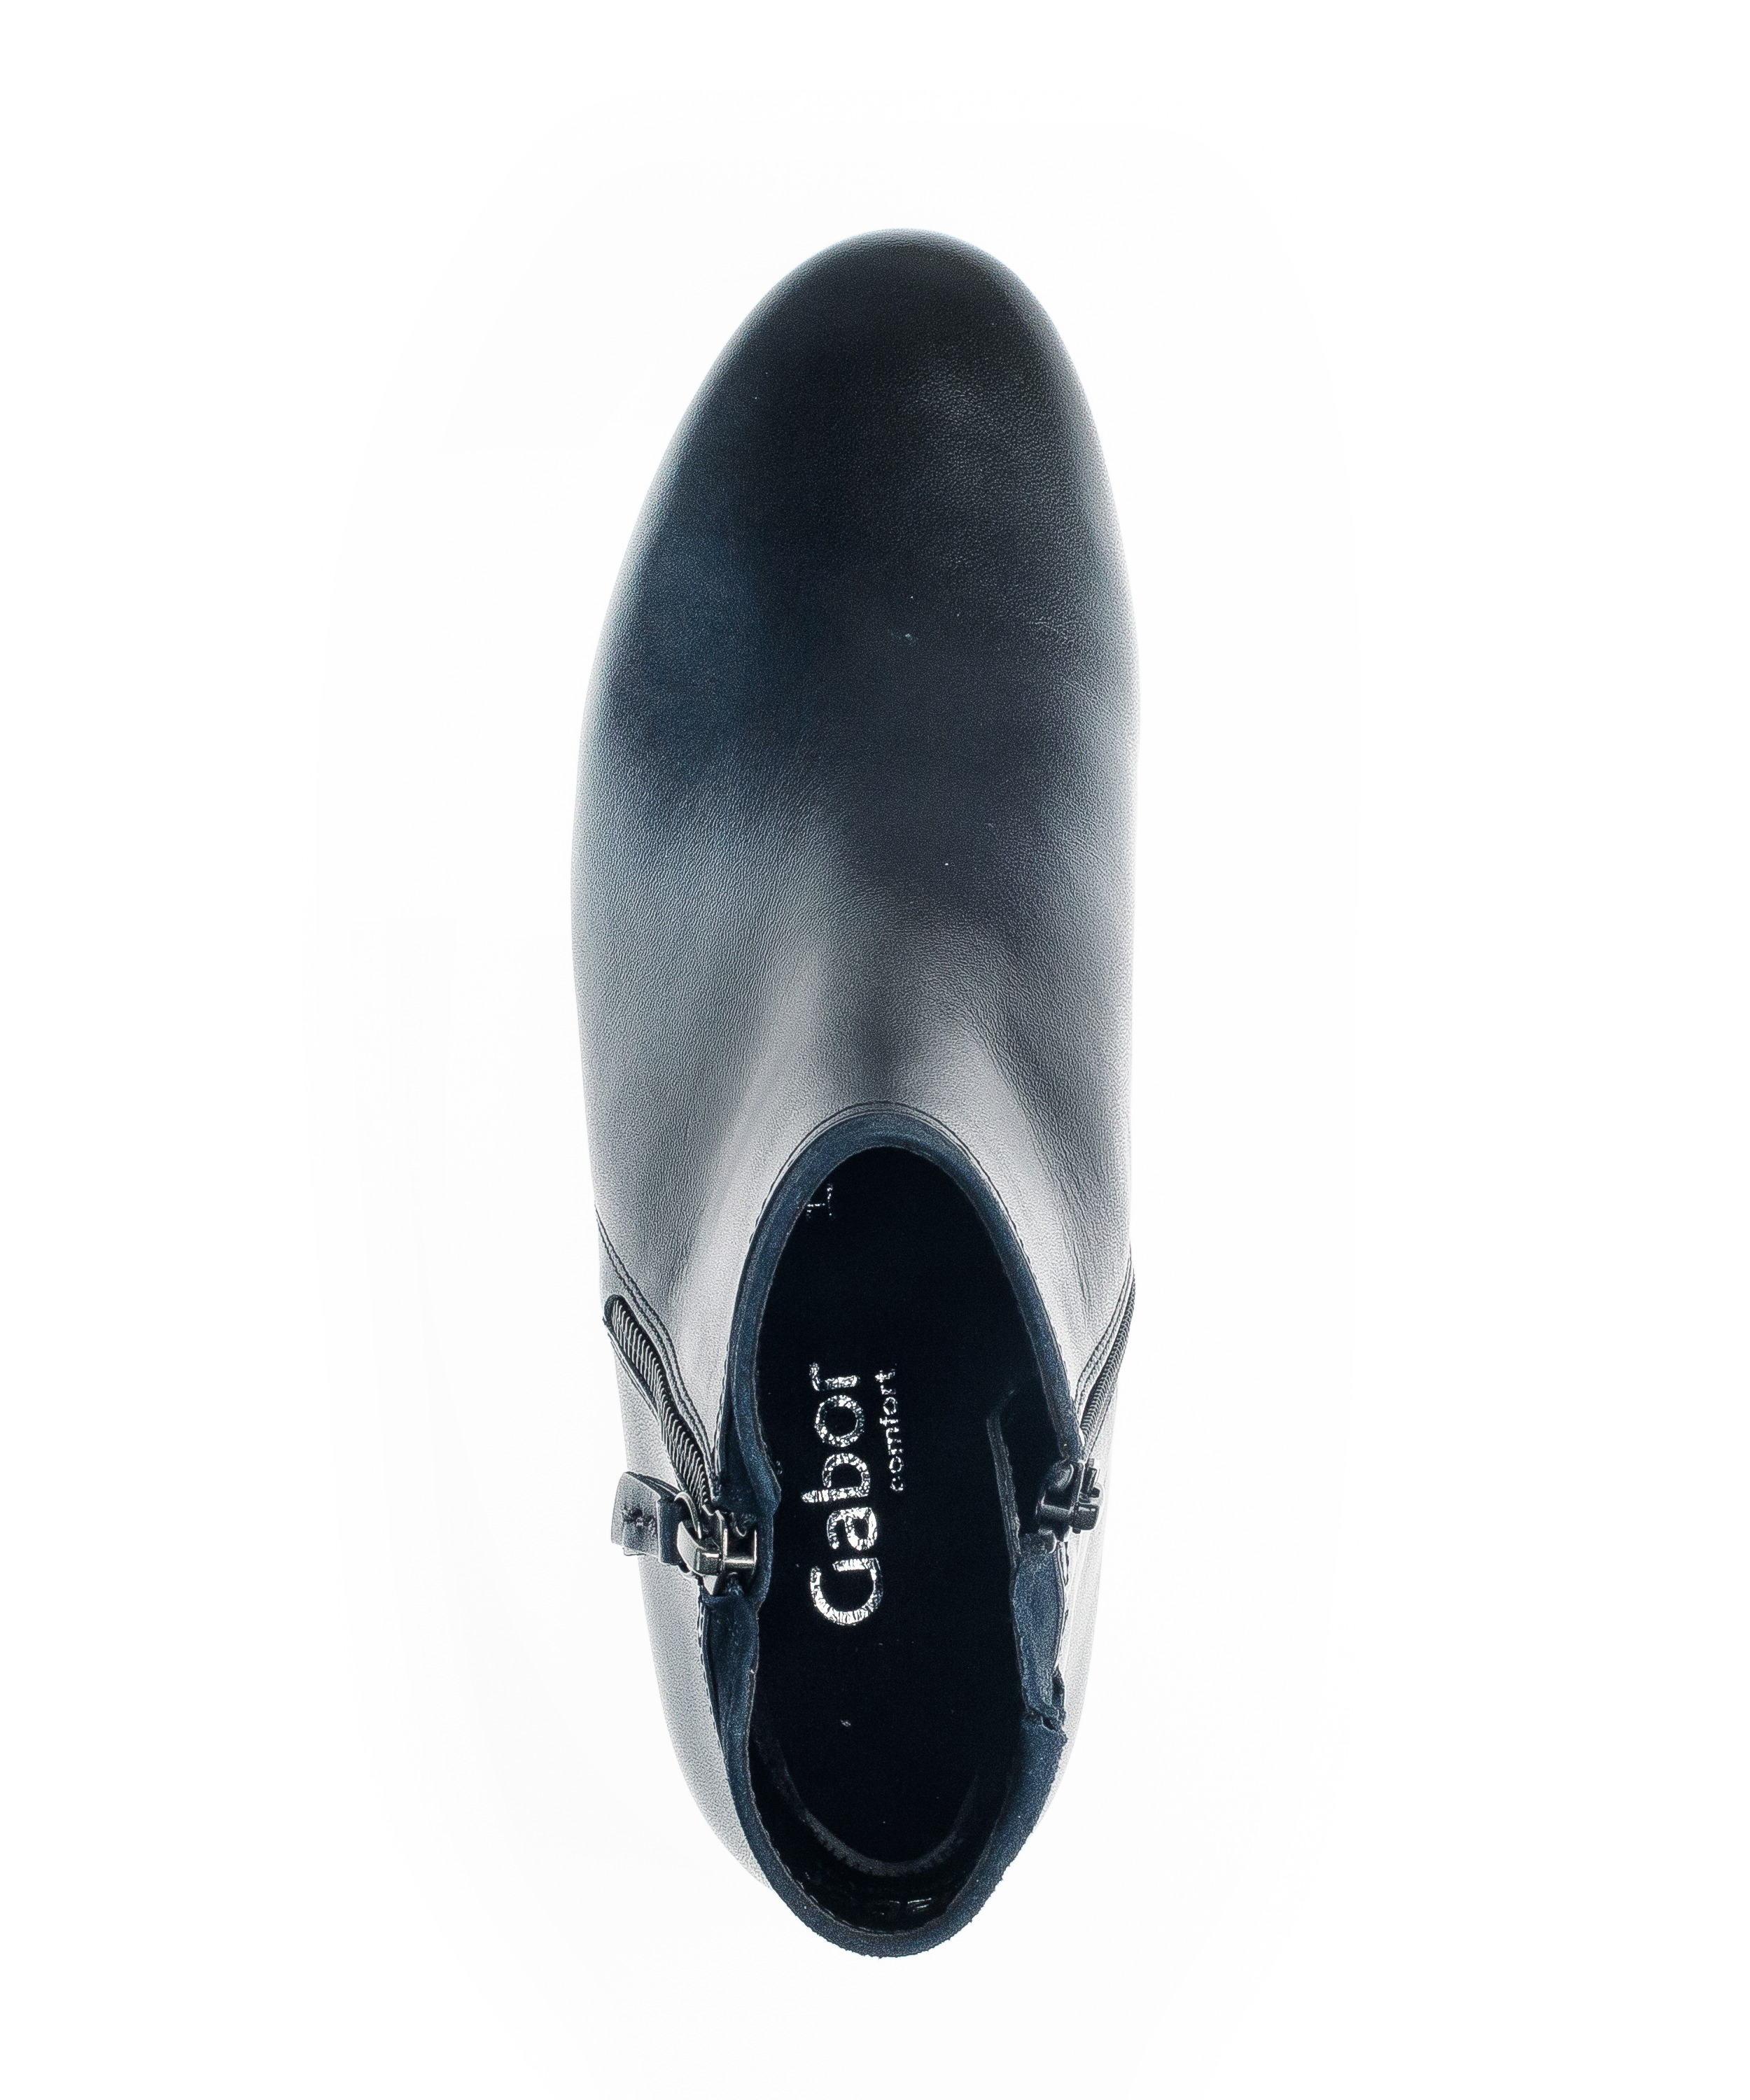 Gabor Shoes Stiefelette - Blau Glattleder